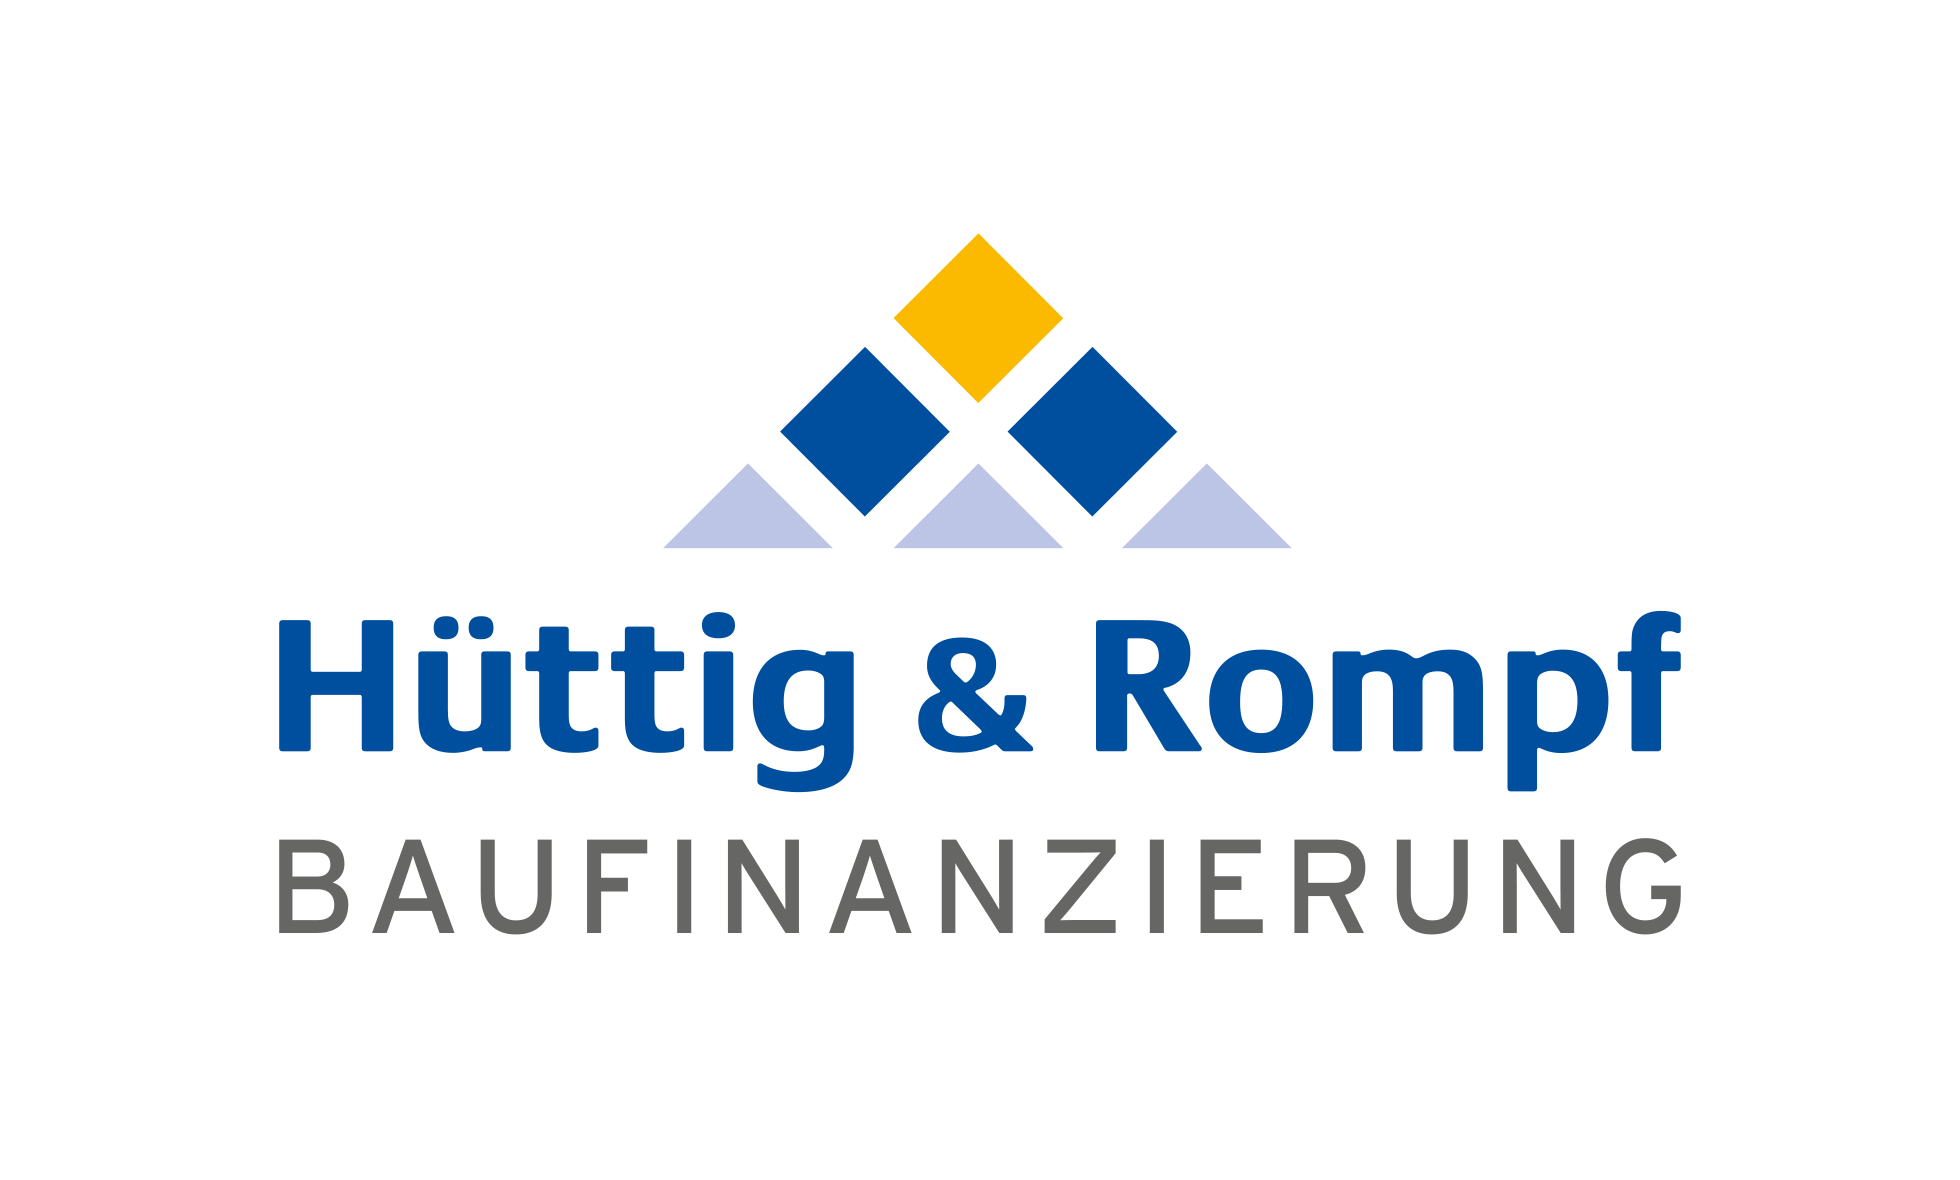 Hüttig & Rompf in Frankfurt